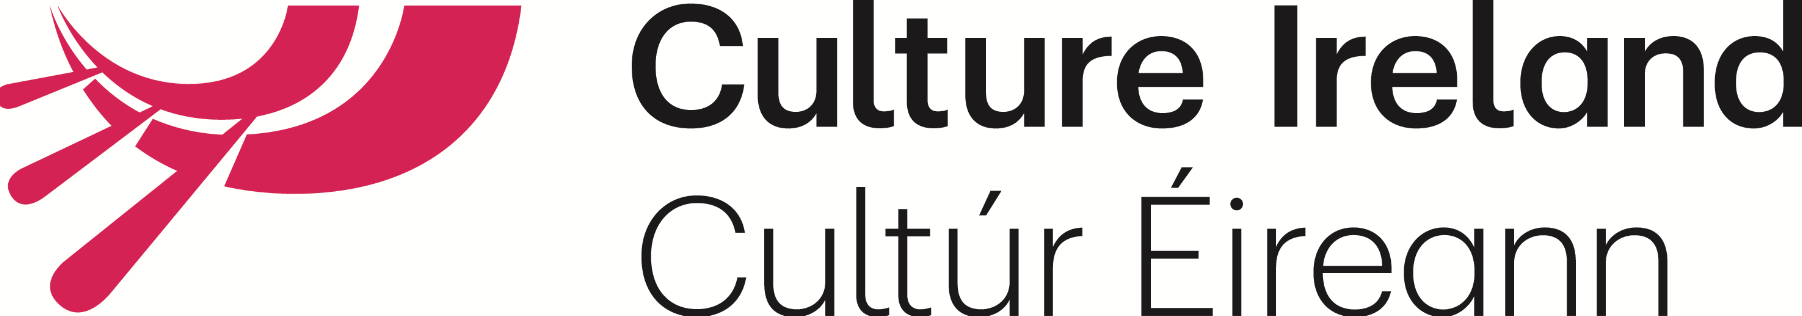 Culture ireland logo